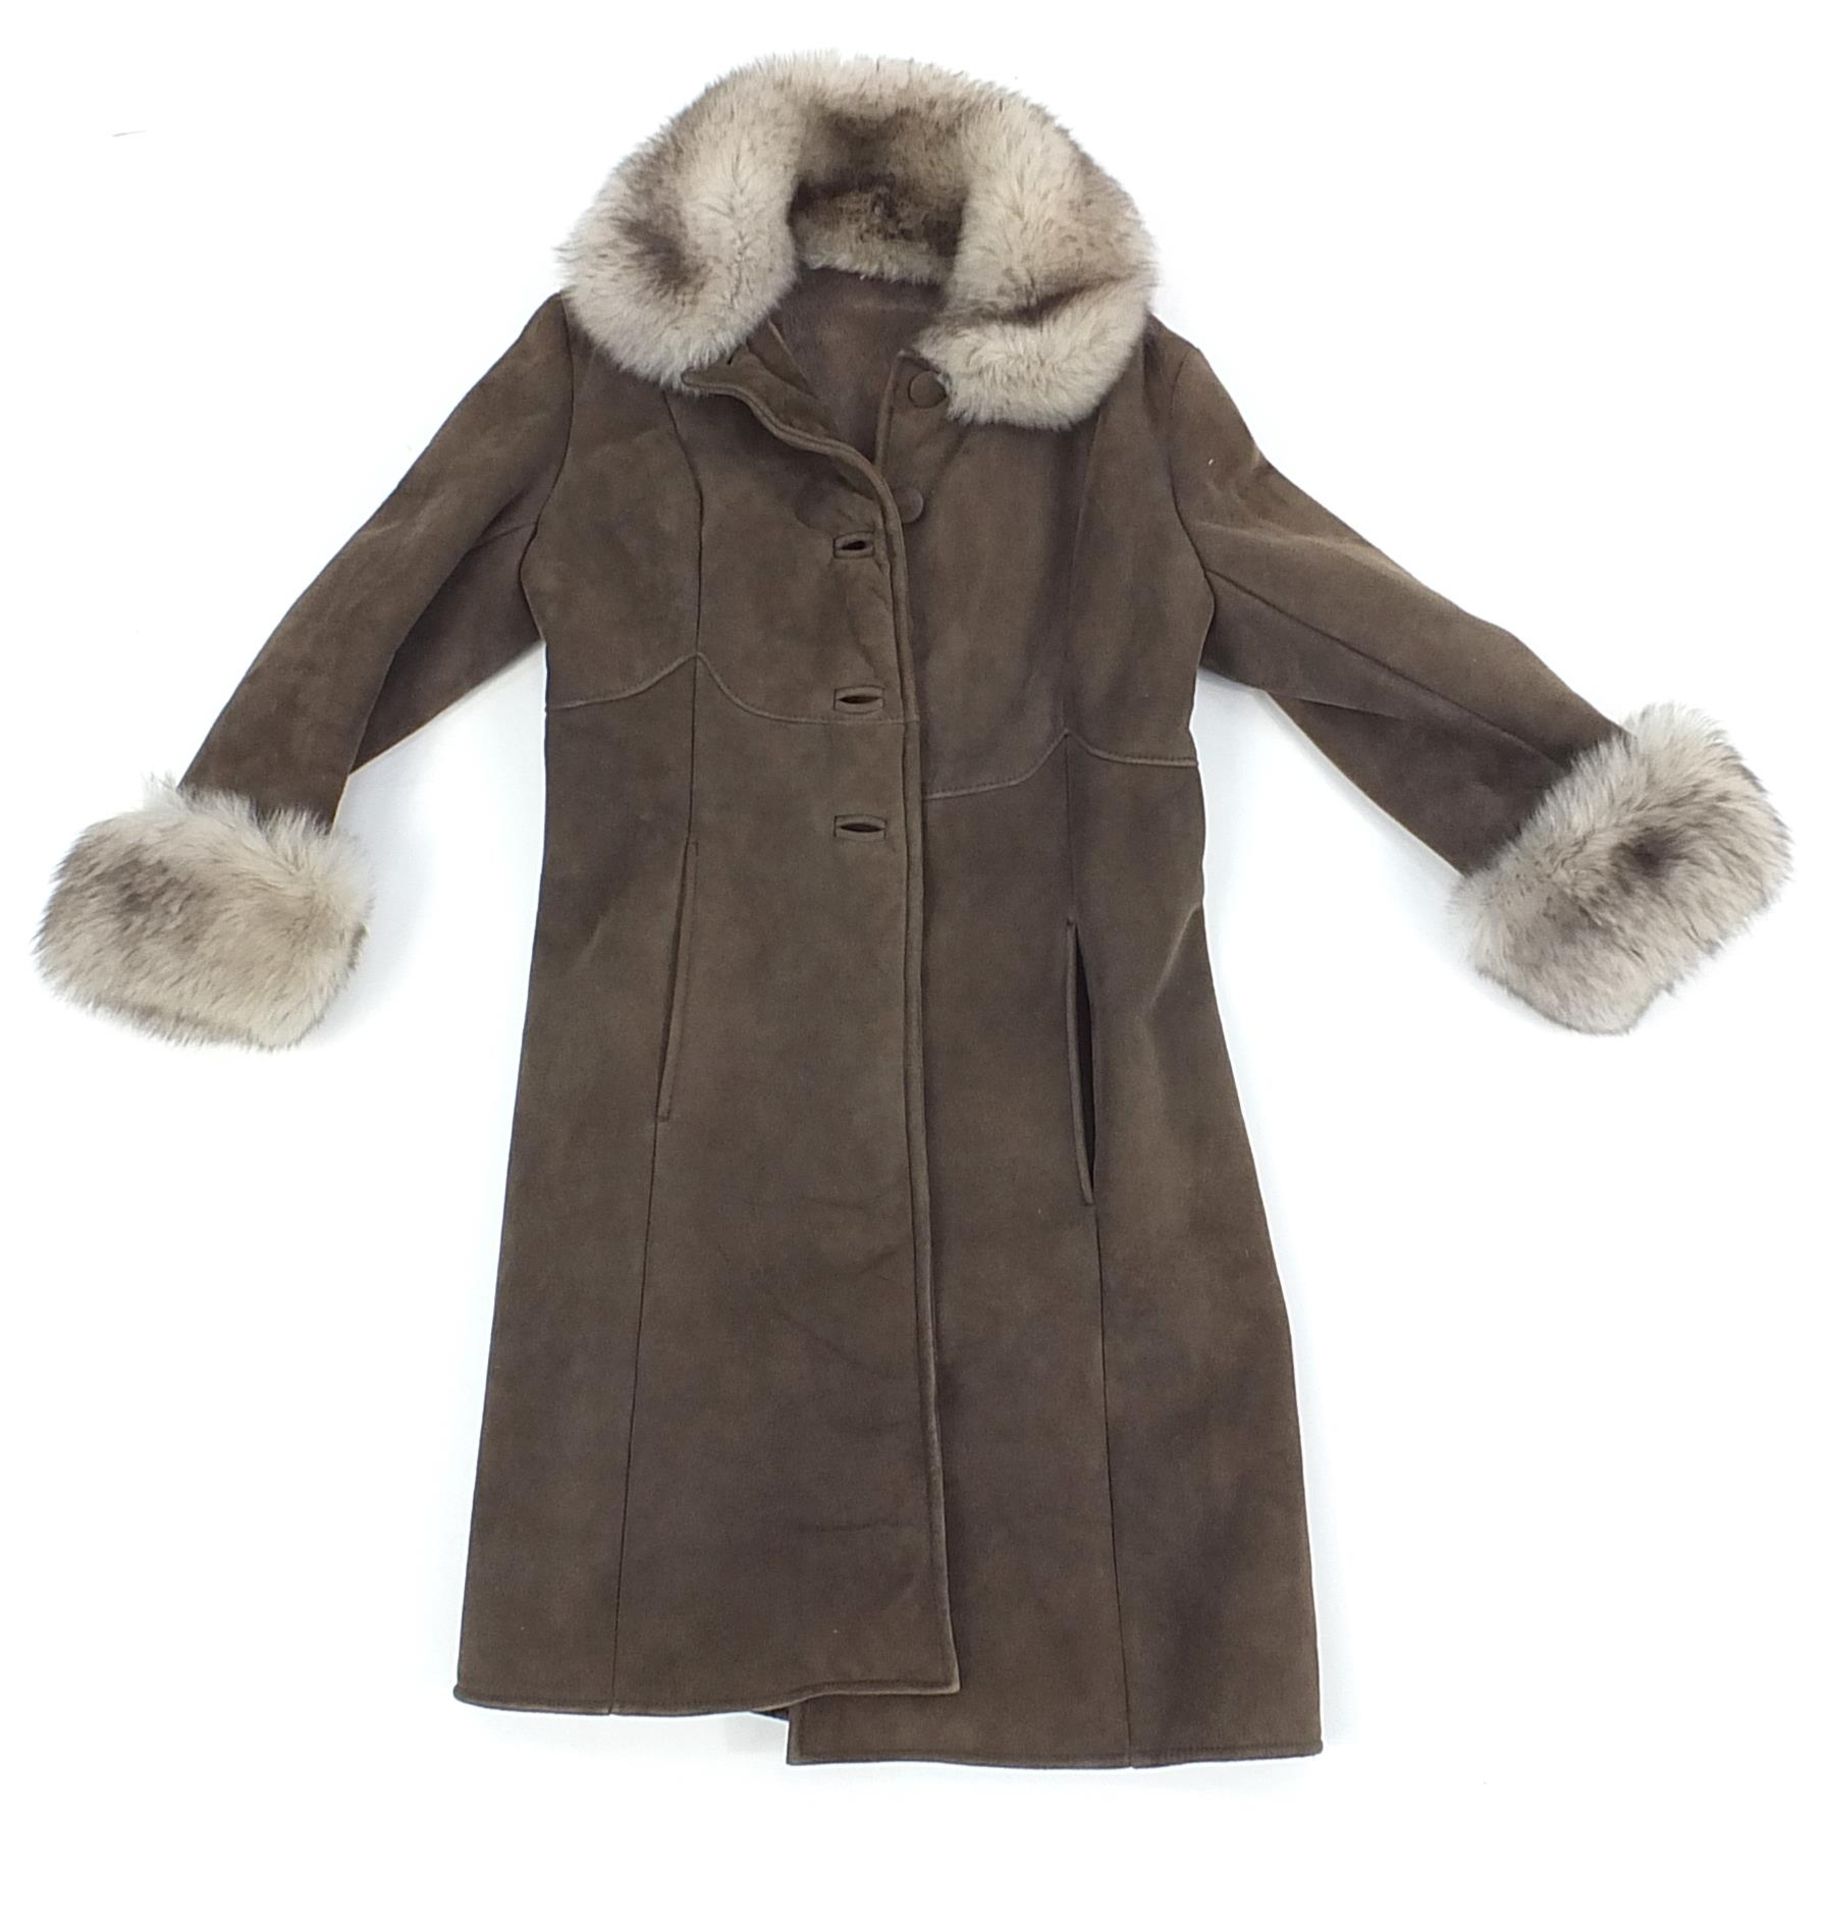 Real sheepskin ladies coat, size 14/16